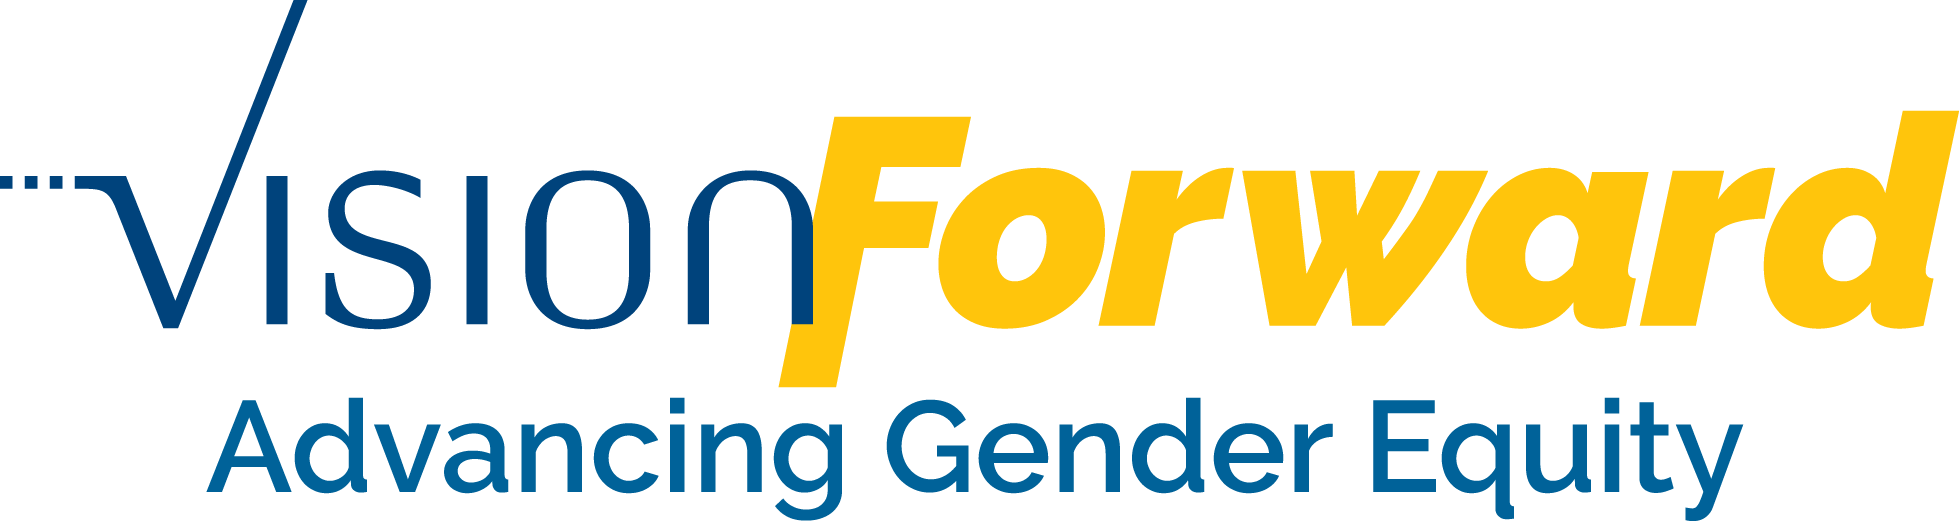 VisionForward Advancing Gender Equity